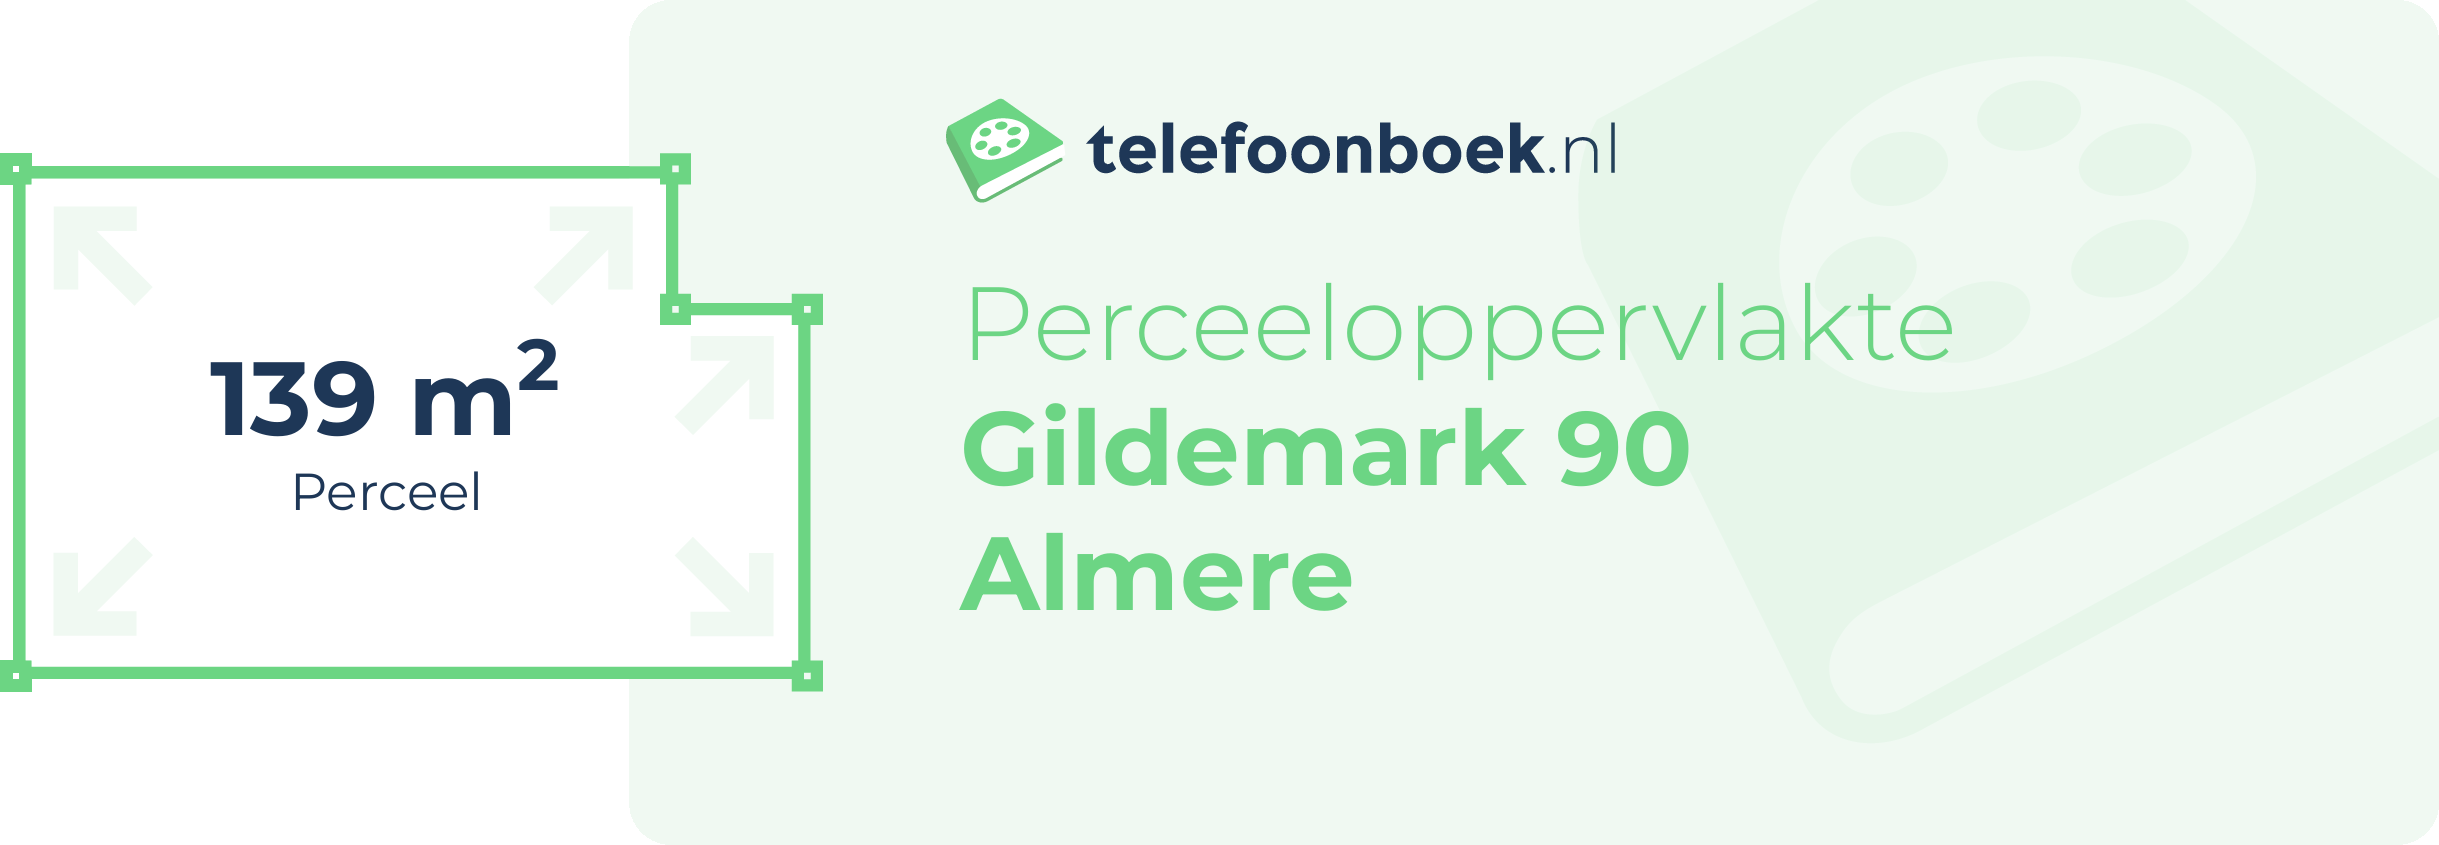 Perceeloppervlakte Gildemark 90 Almere